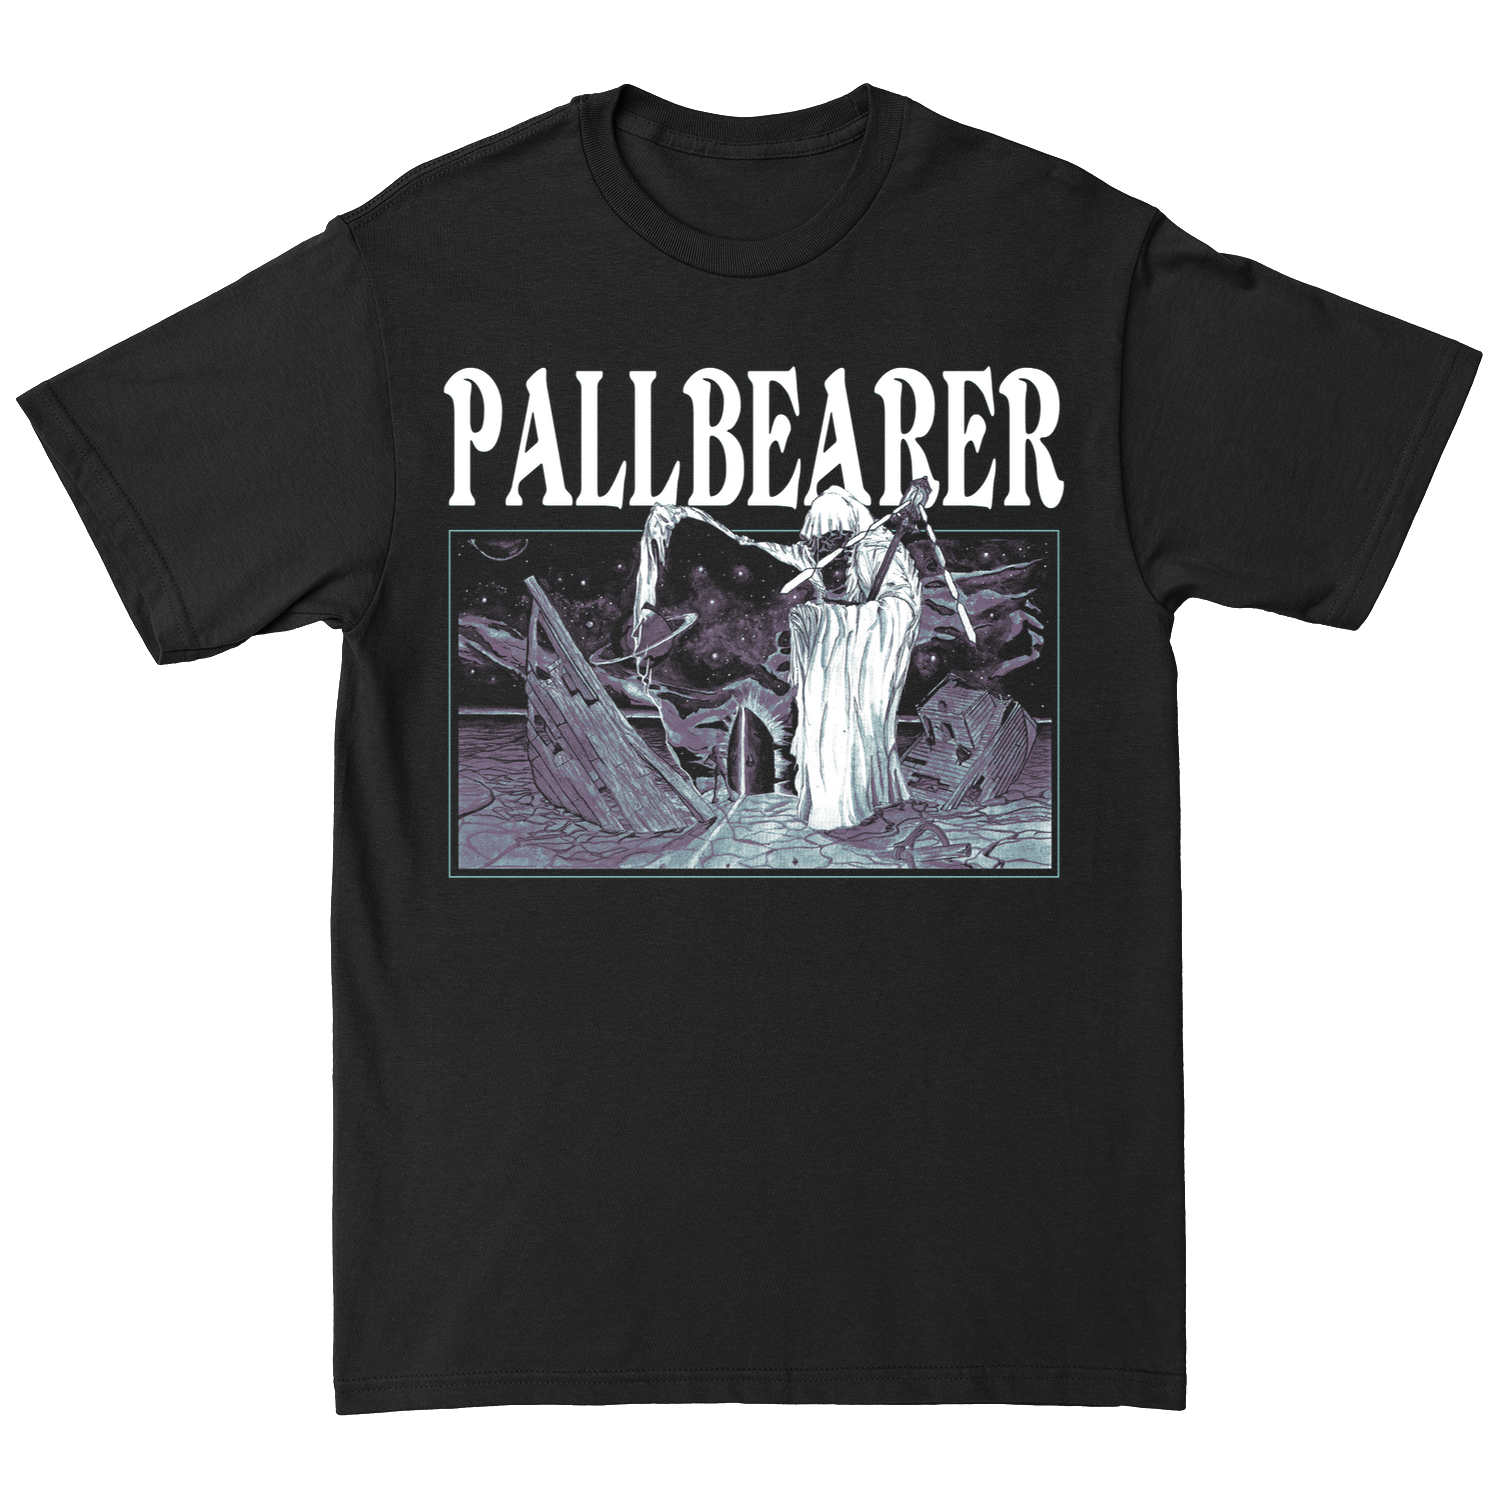 PALLBEARER "Sorrow And Extincton" Black T-Shirt